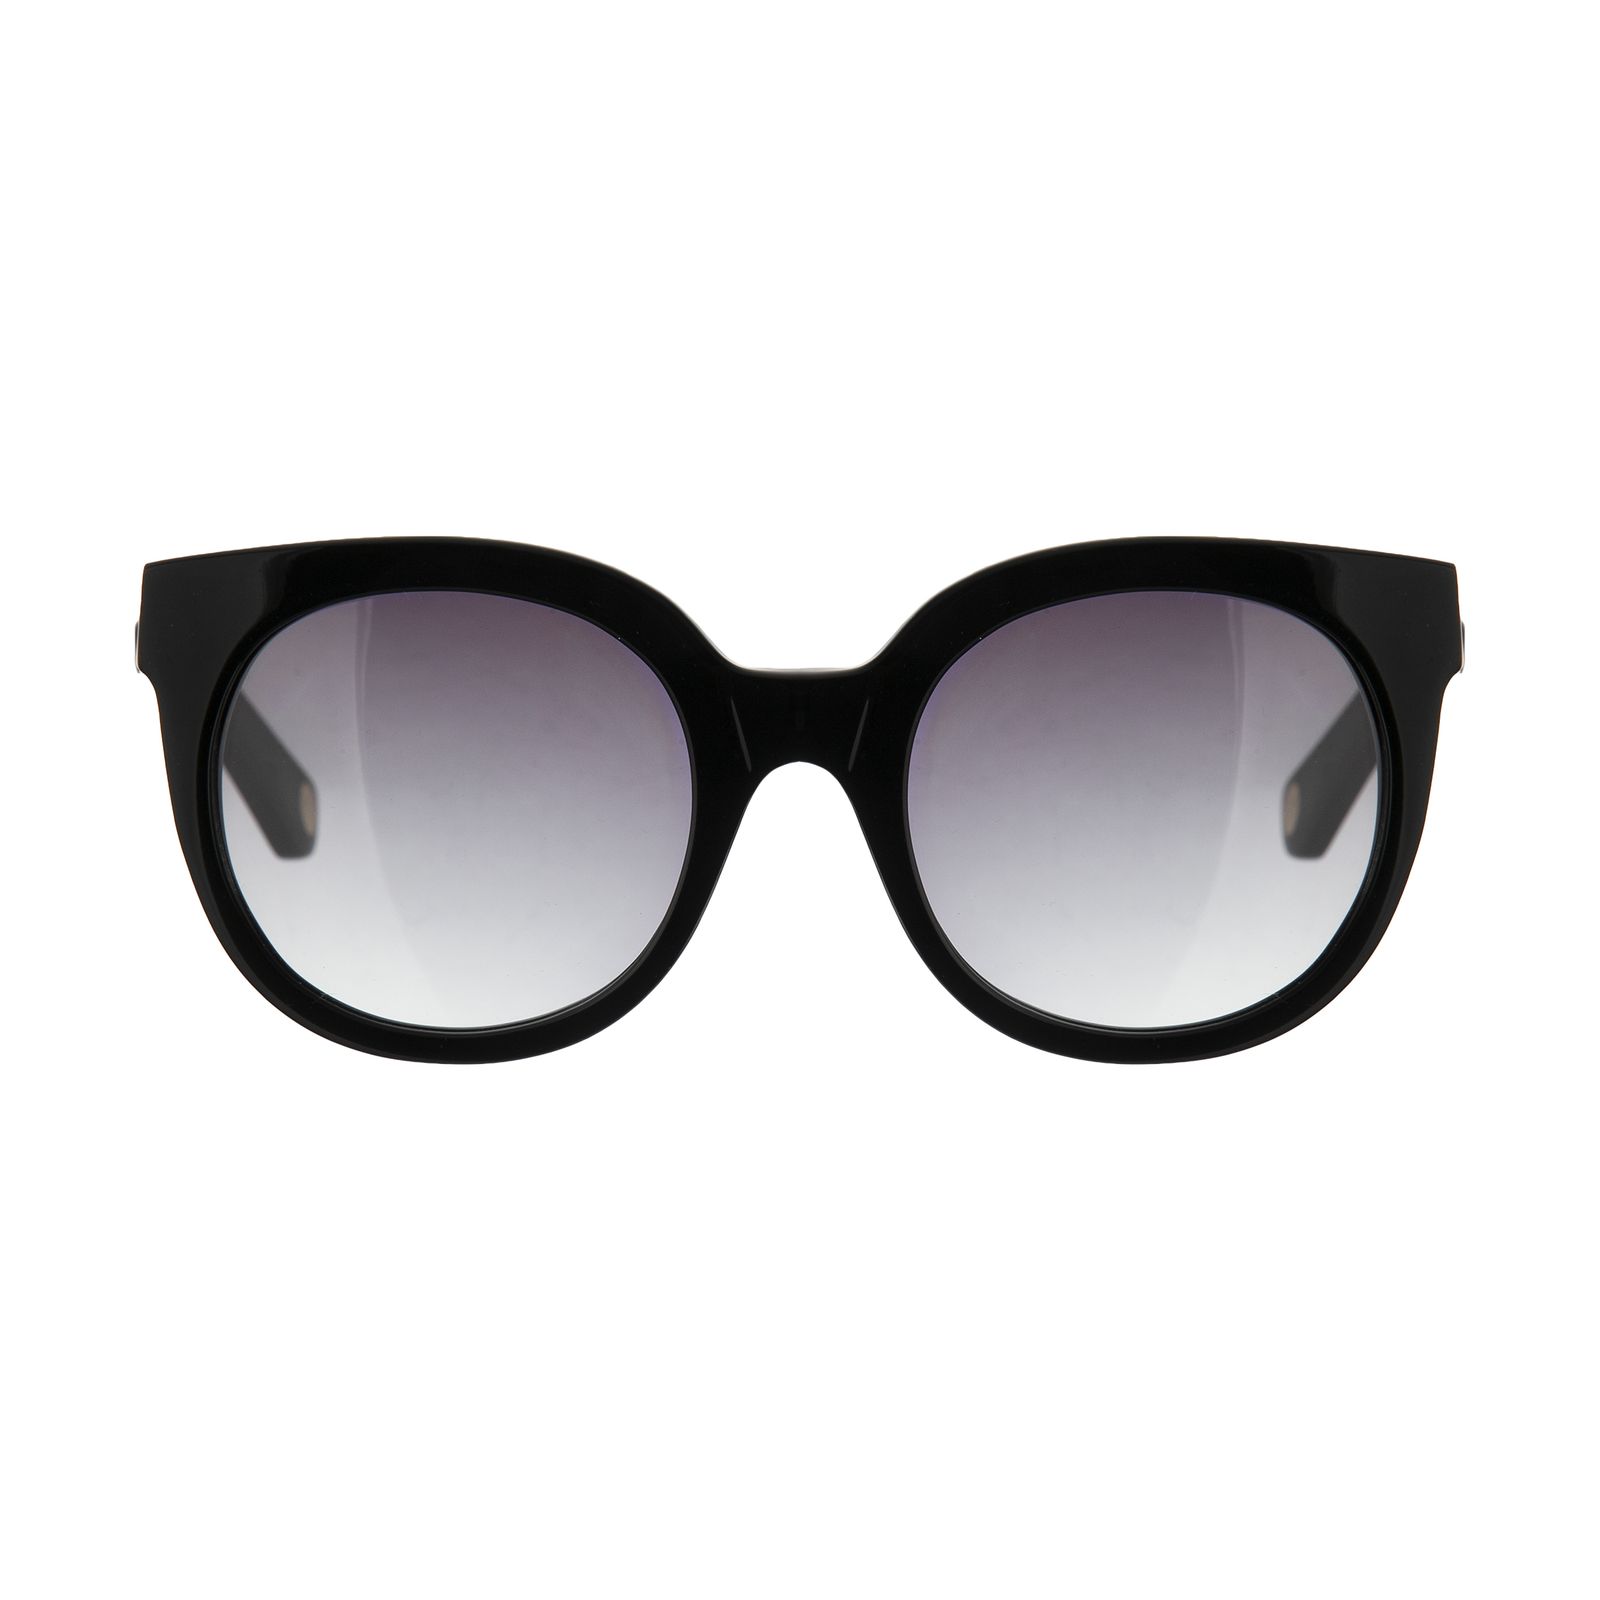  عینک آفتابی مارک جکوبس مدل 466 -  - 1